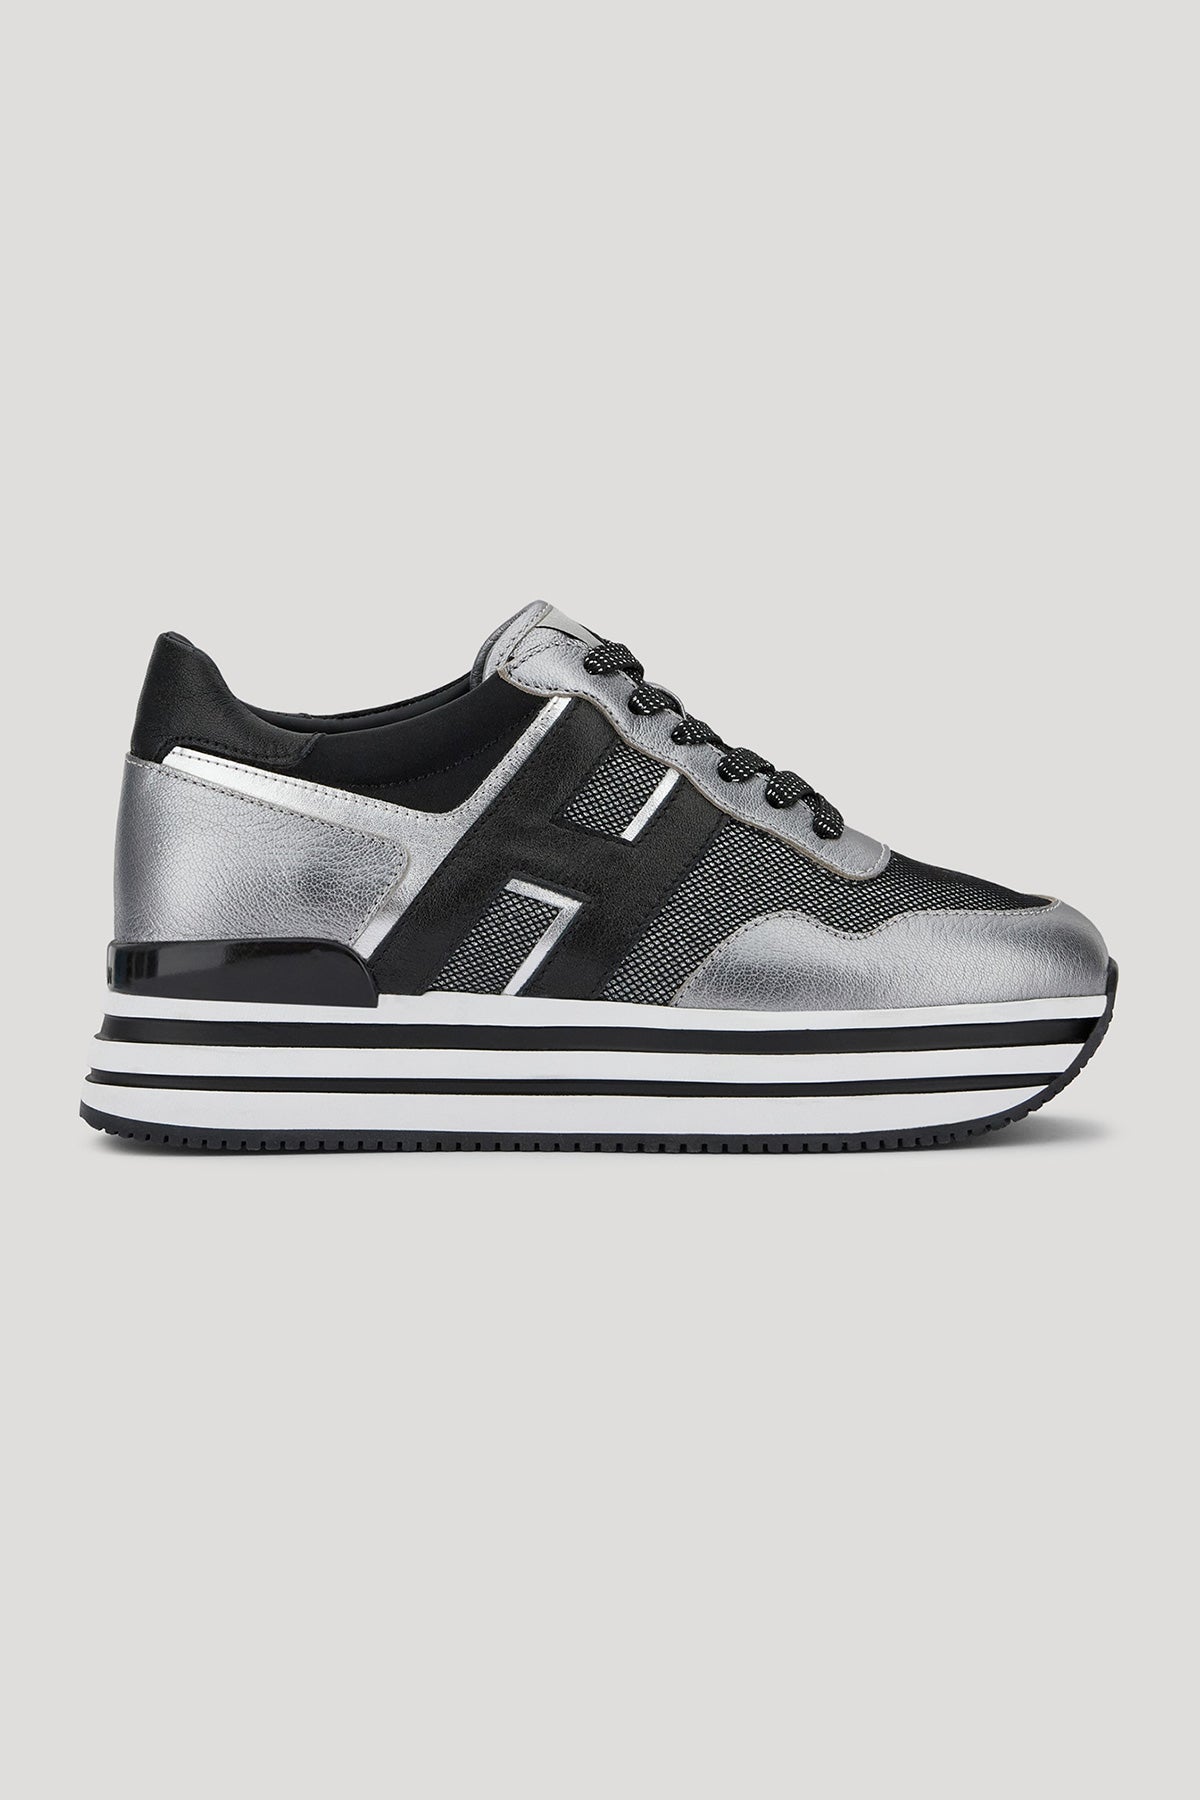 Hogan Midi H222 Sneaker Ayakkabı-Libas Trendy Fashion Store